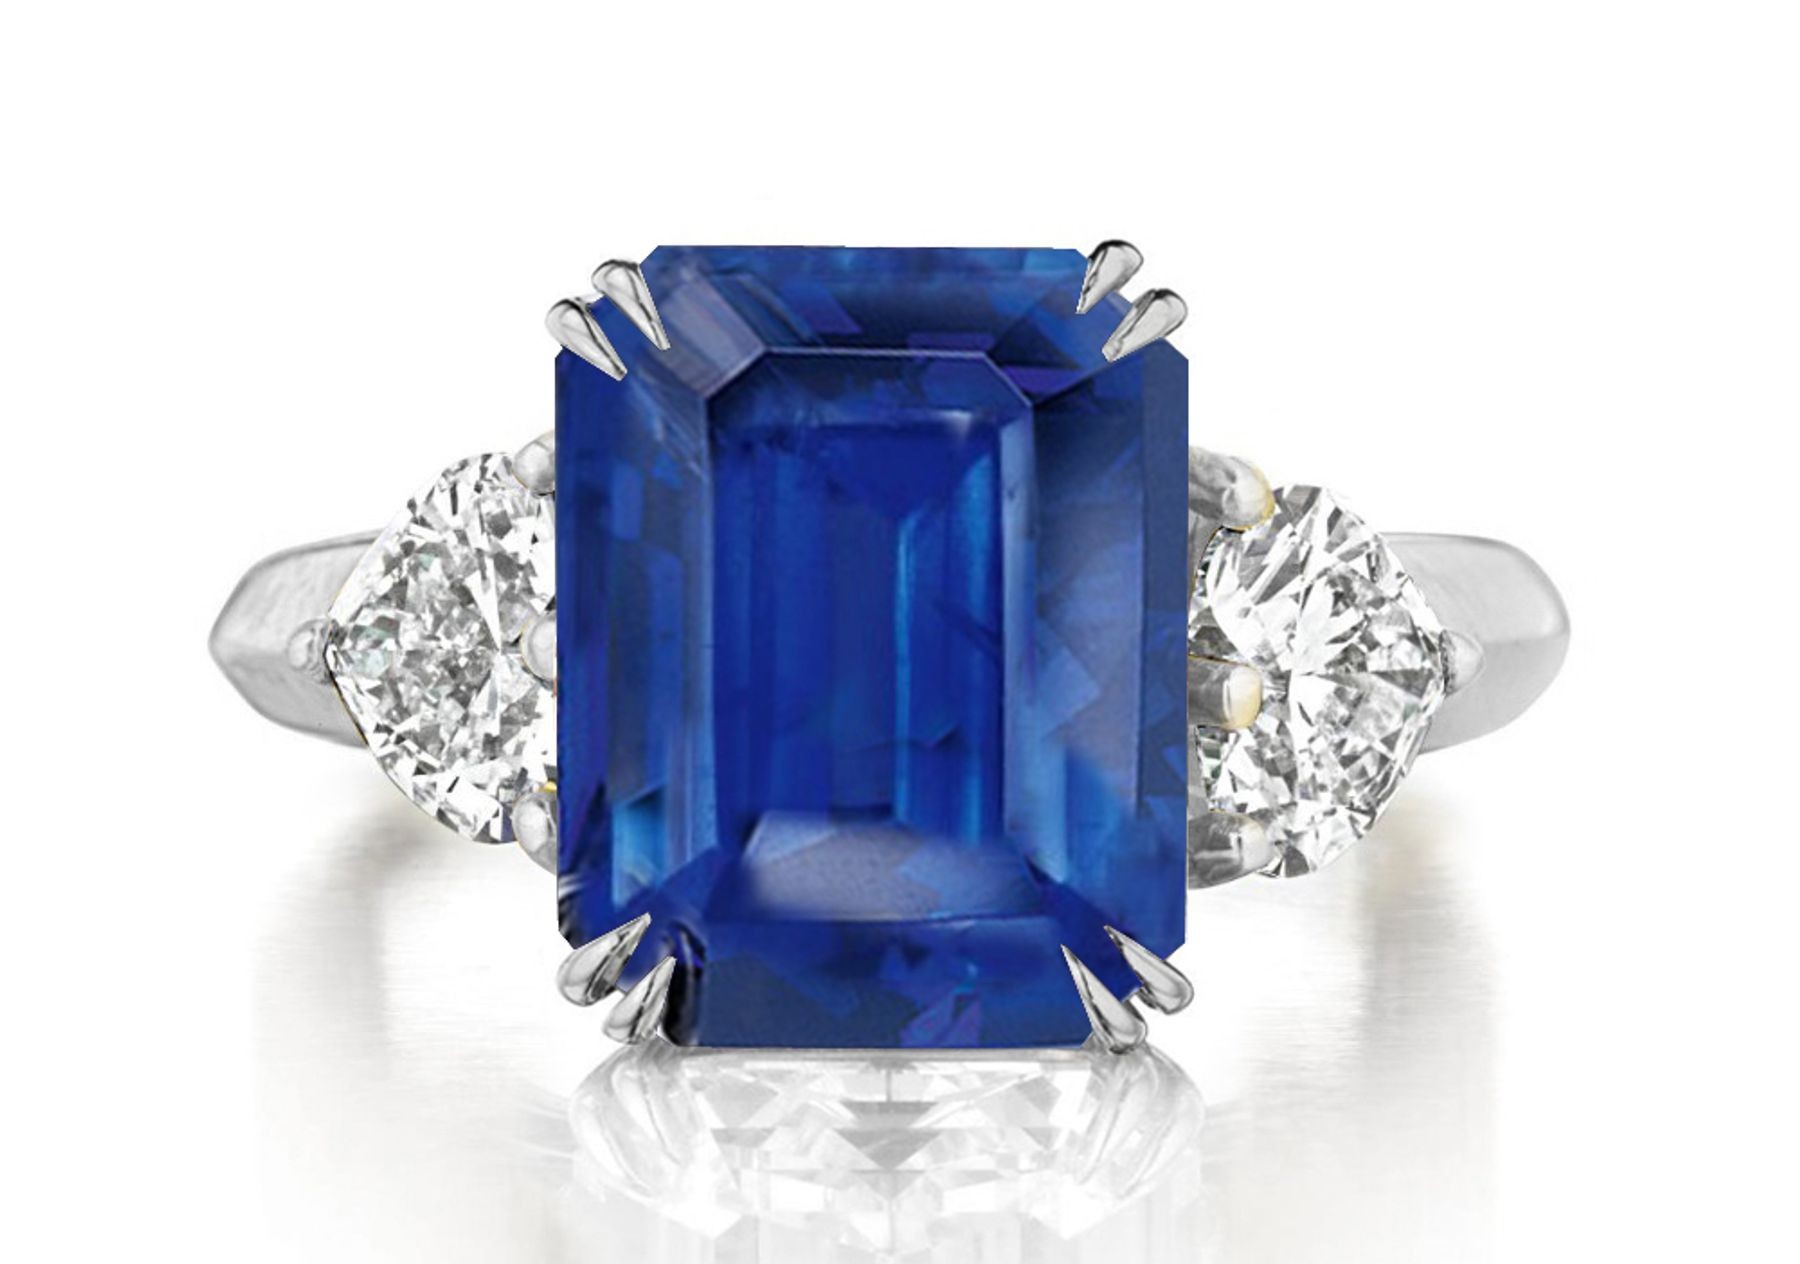 Premium Quality Unique Heart Shaped Diamonds & Blue Sapphire Emerald Cut Three Stone Rings